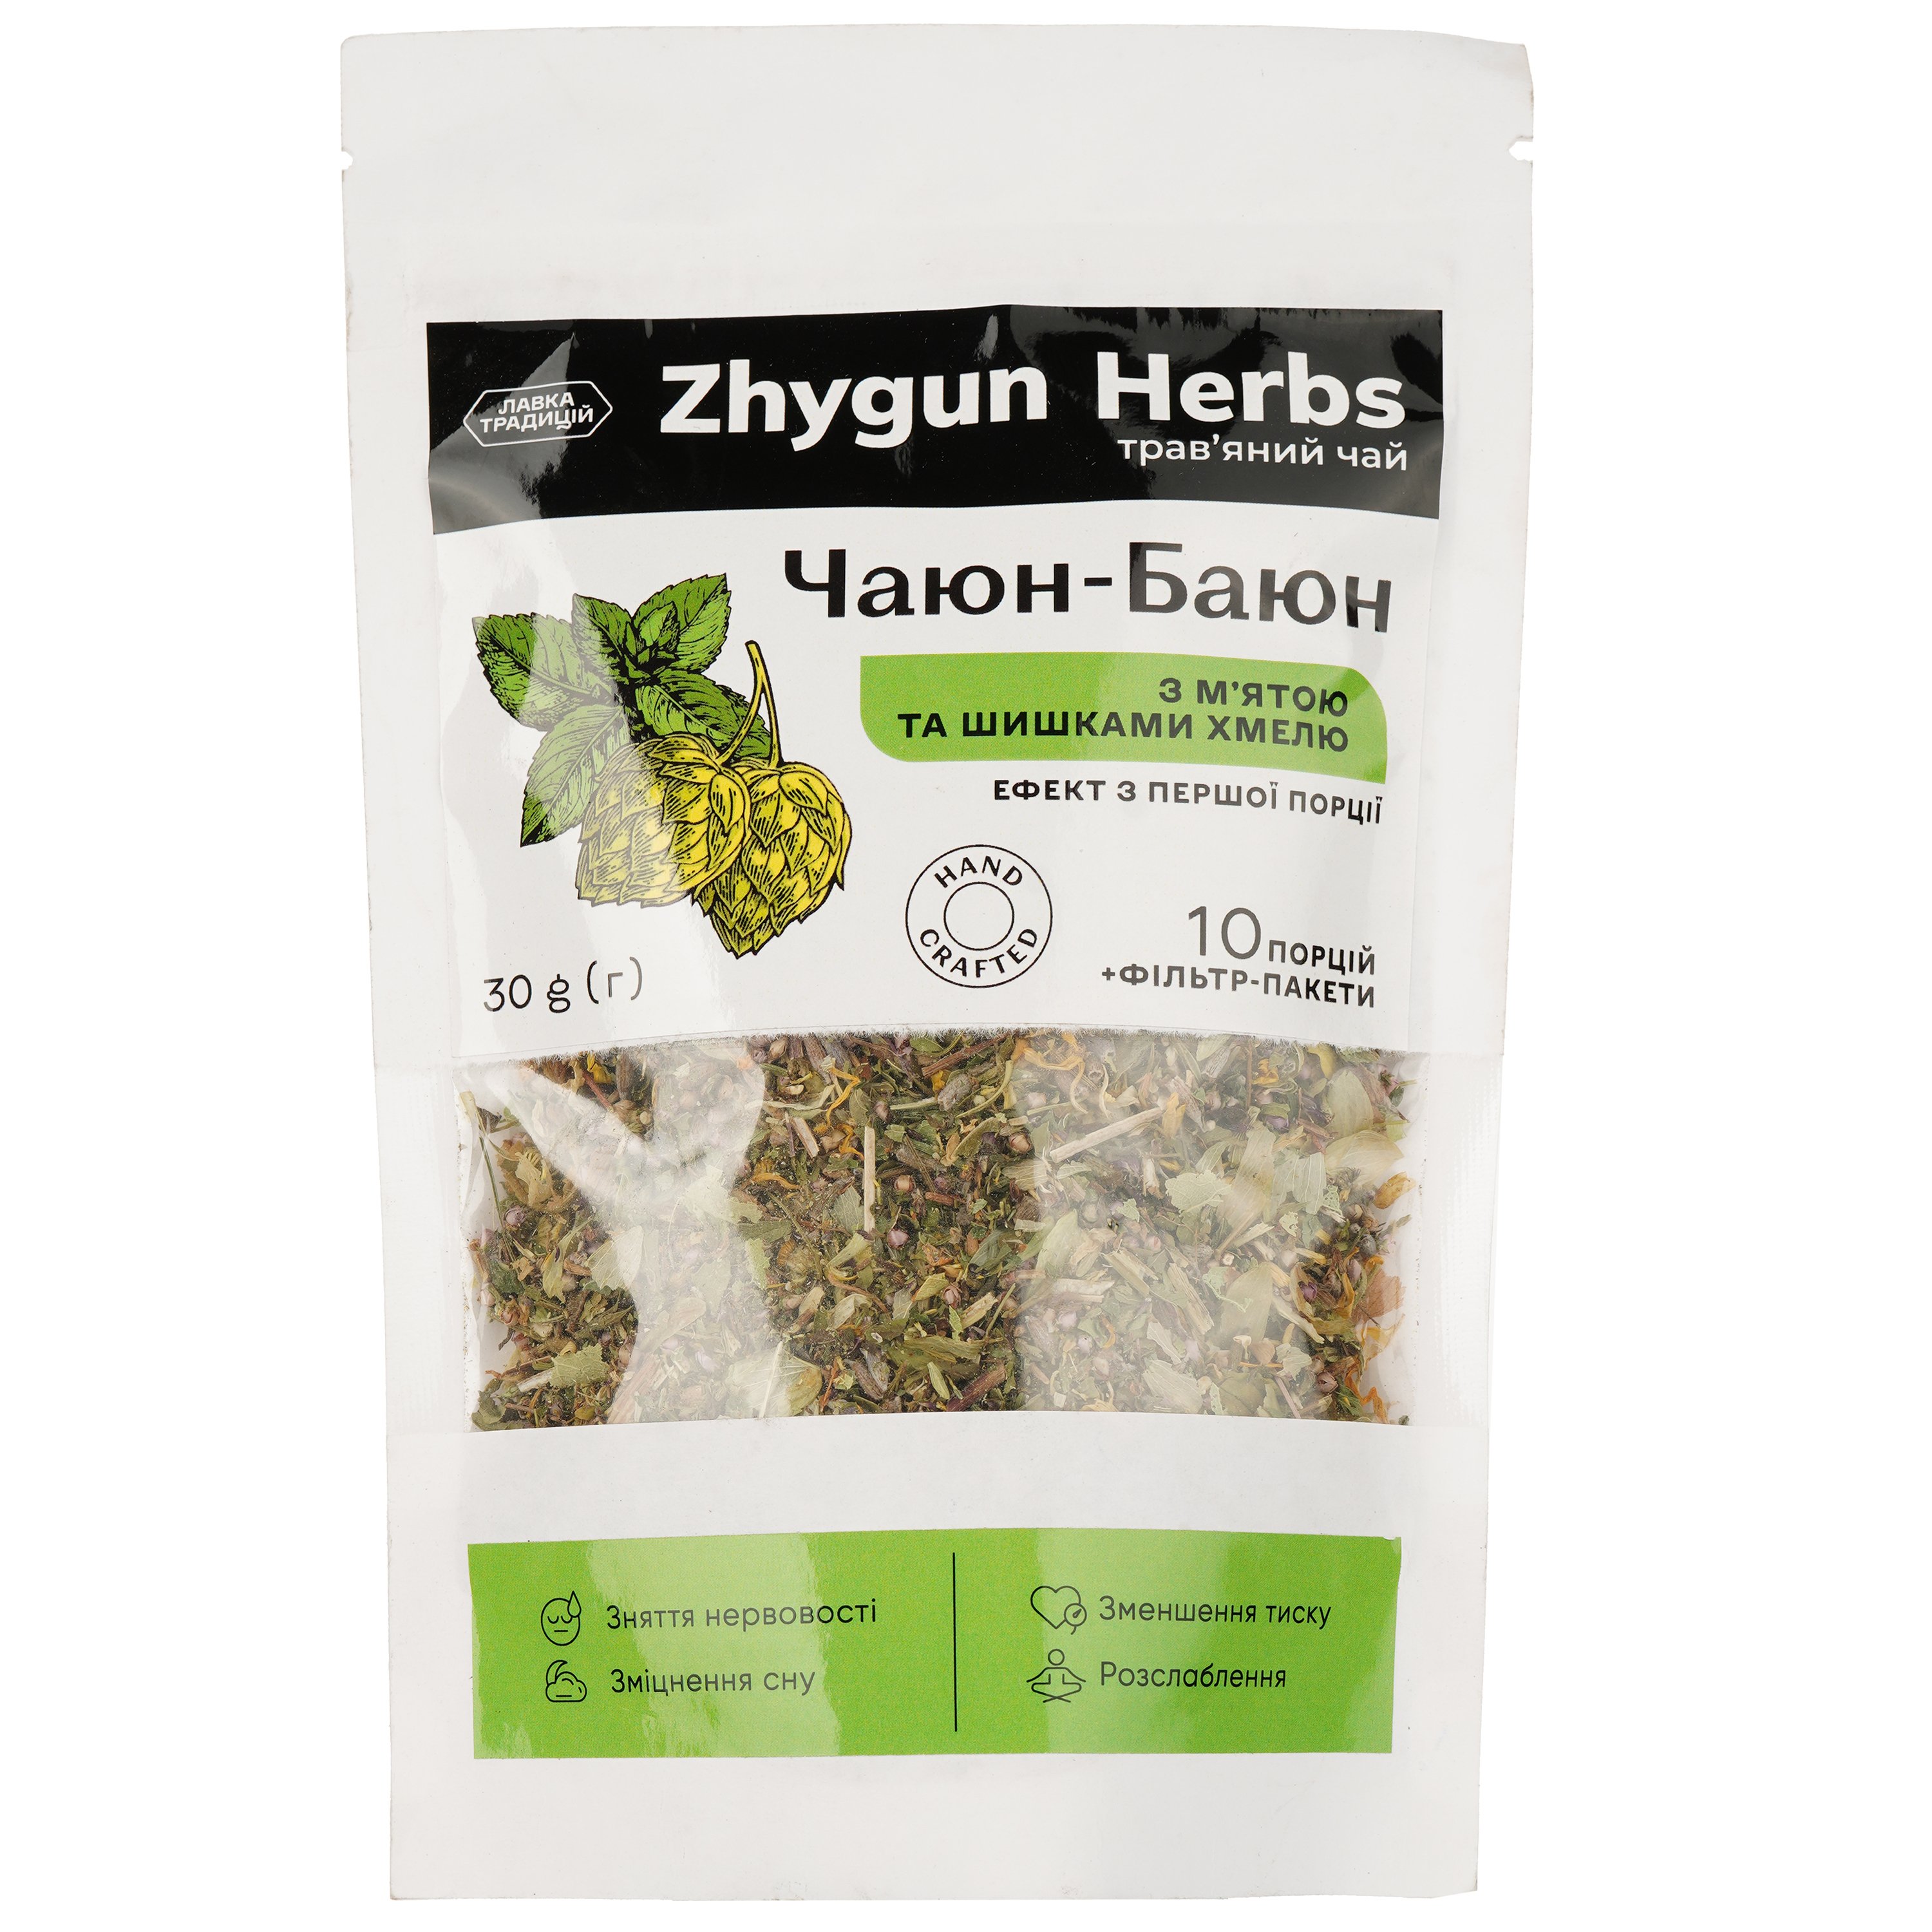 Чай трав’яний Zhygun Herbs Чаюн-Баюн з м'ятою та шишками хмелю, 30 г - фото 1